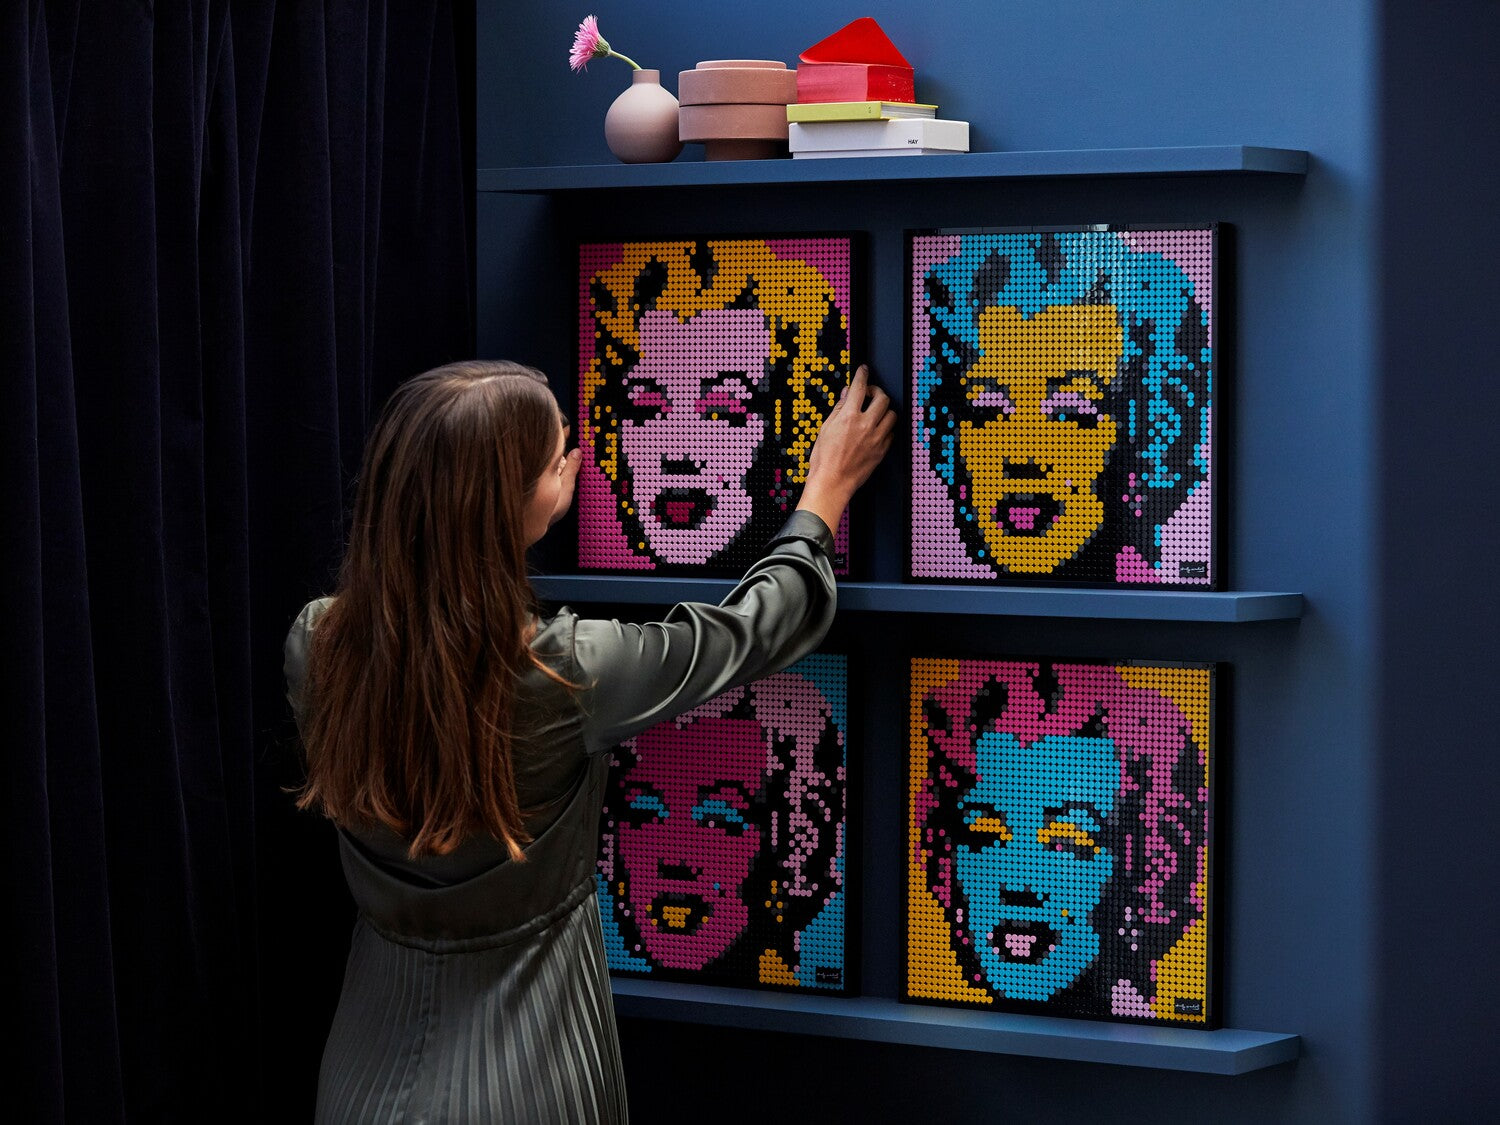 LEGO® Art: Andy Warhol's Marilyn Monroe